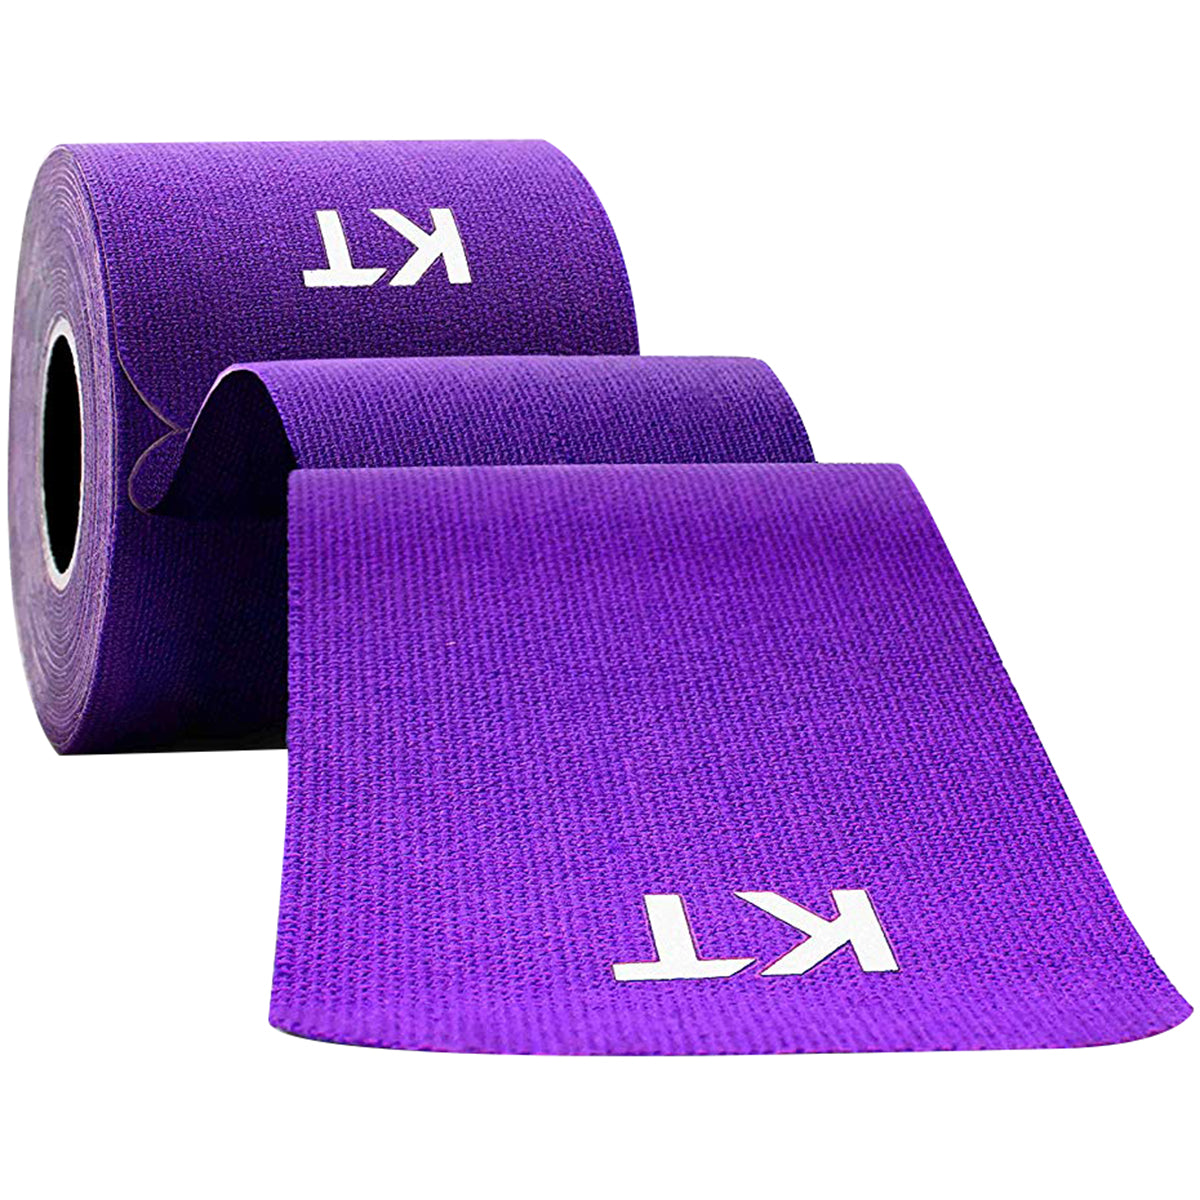 KT Tape Cotton 10" Precut Kinesiology Therapeutic Sports Roll, 20 Strips, Purple KT Tape